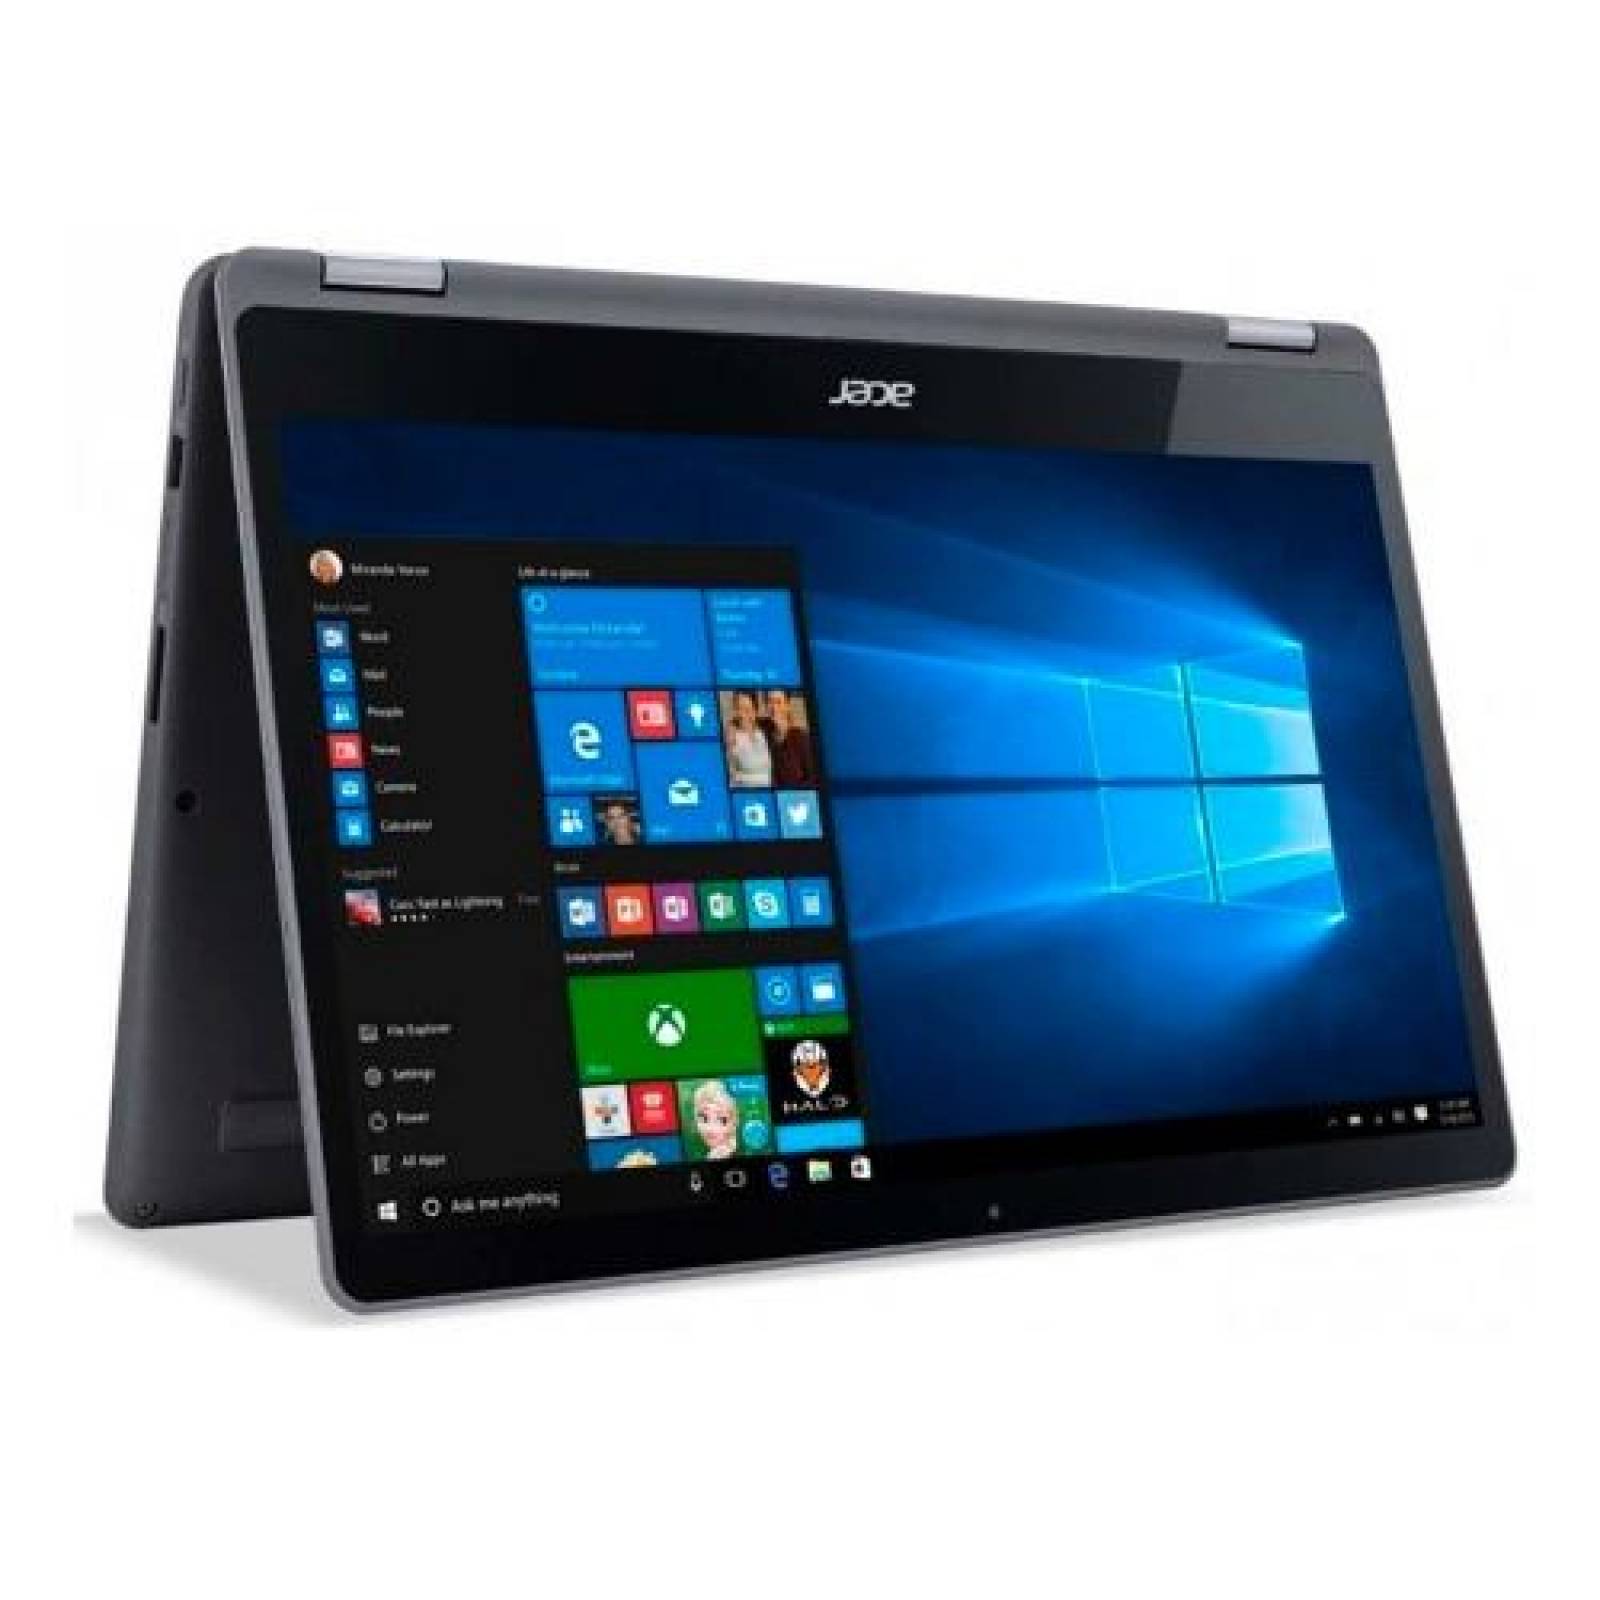 Acer Aspire Laptop 1 TB 15.6" Core i7 Touchscreen Win10